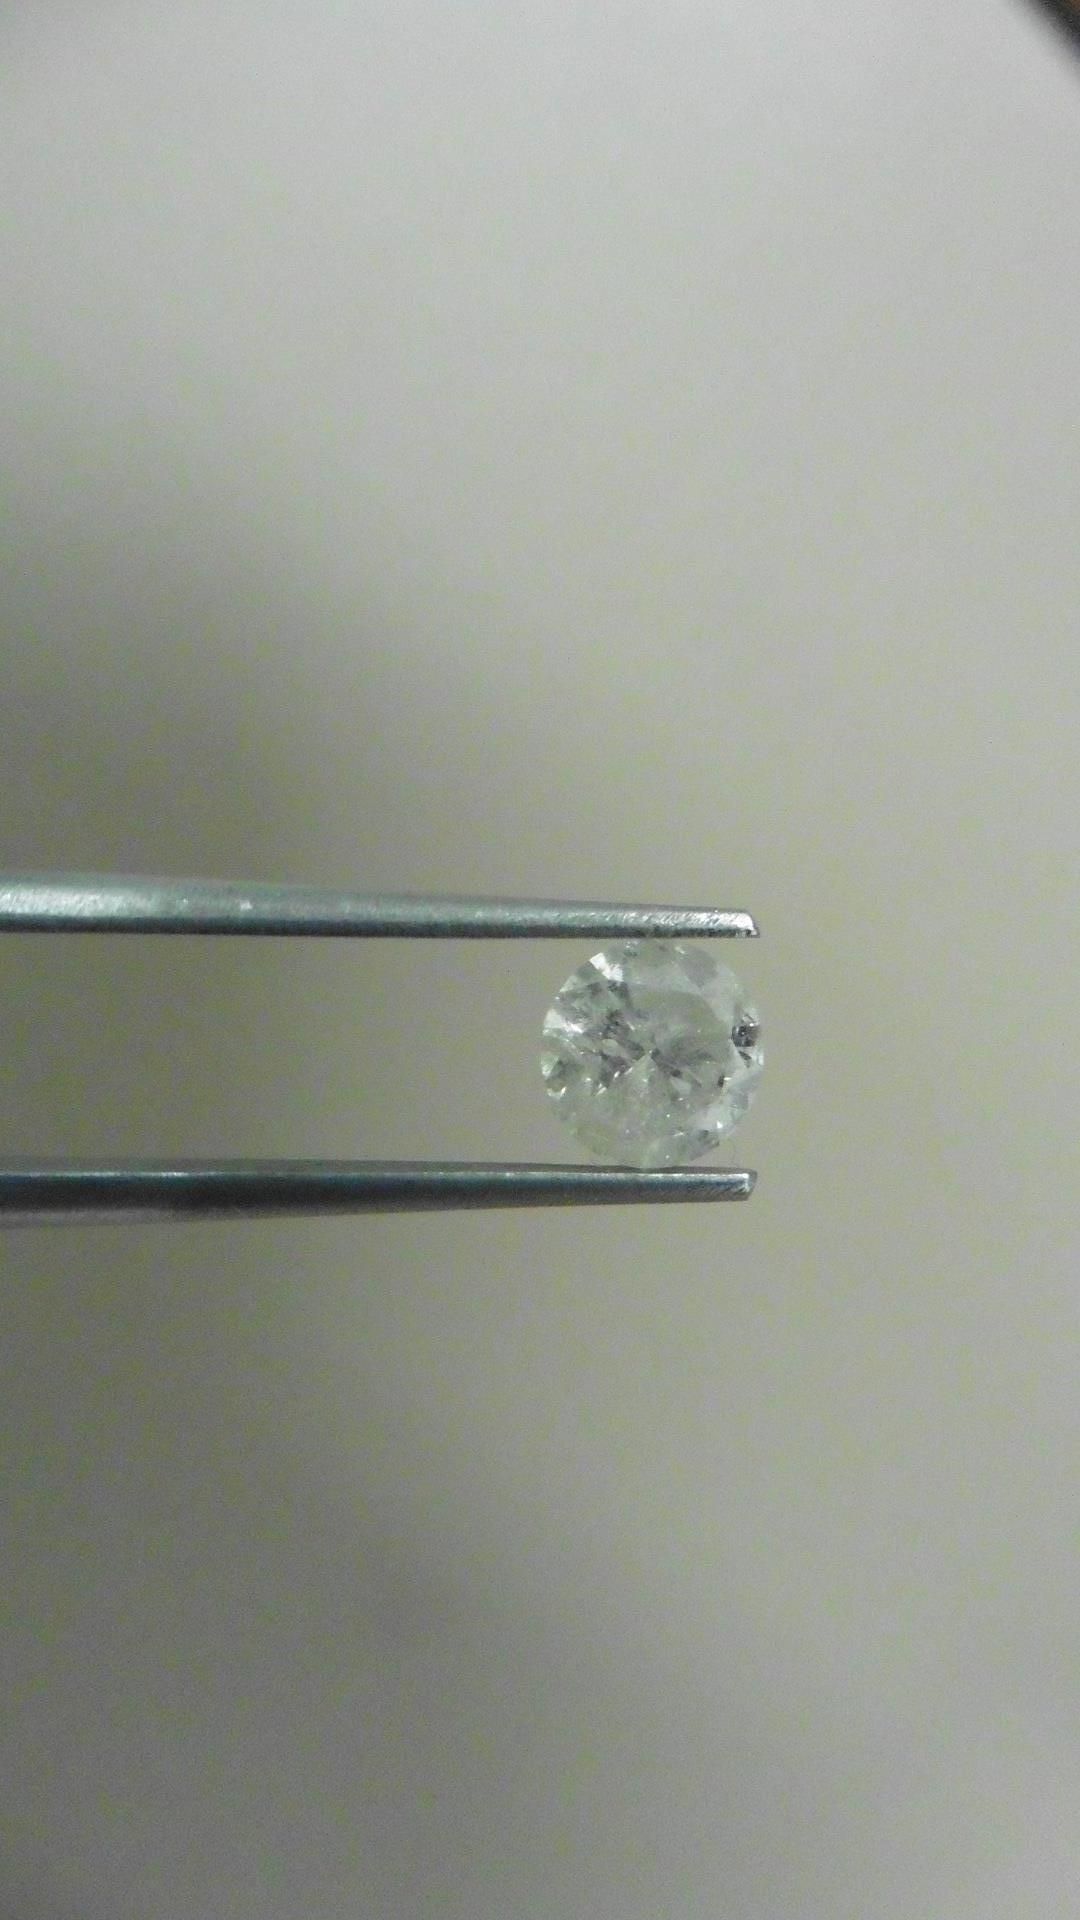 1.02ct Brilliant Cut Diamond, Enhanced stone. H colour, I2 clarity. 6.27 x 4mm. Valued at £1490